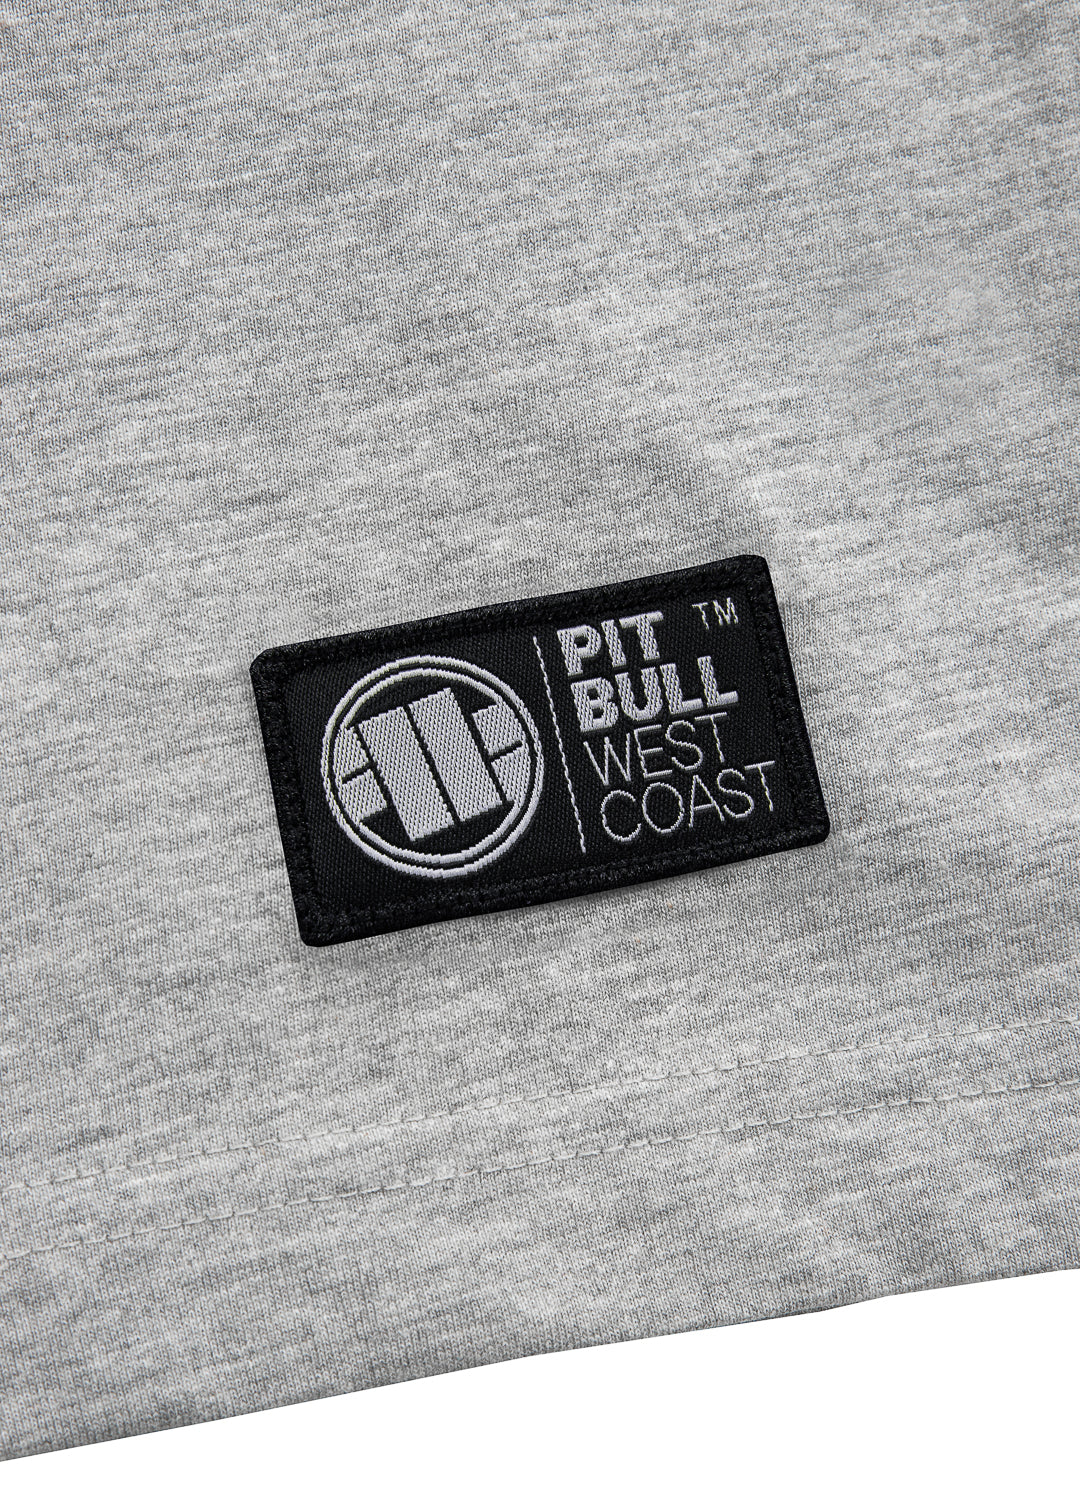 T-shirt HILLTOP 140 GSM Grey - Pitbull West Coast International Store 